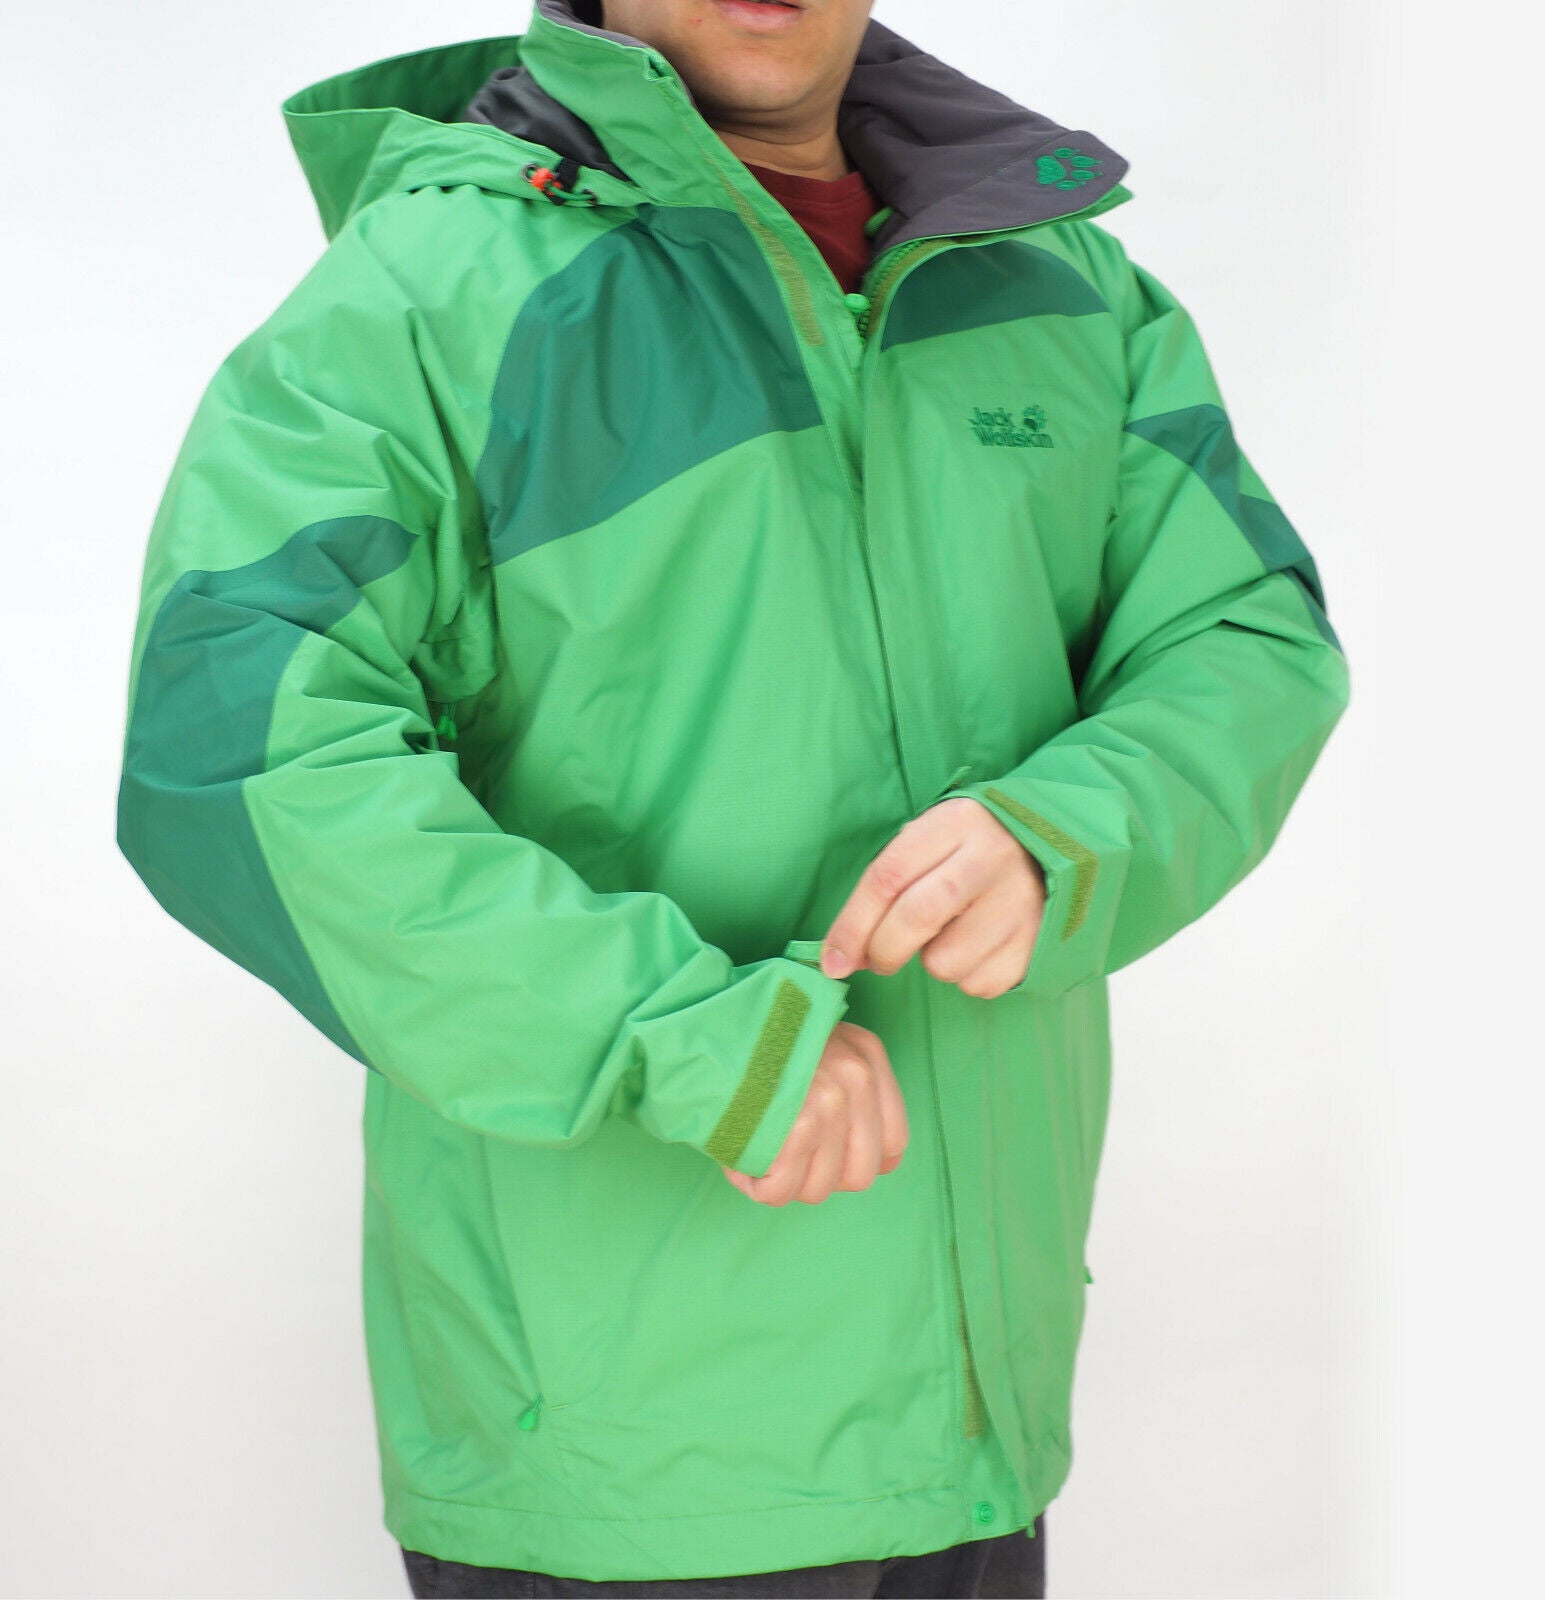 Mens Jack Wolfskin 5006531 Zip Up Seagrass Green Warm Waterproof Hiking Jacket